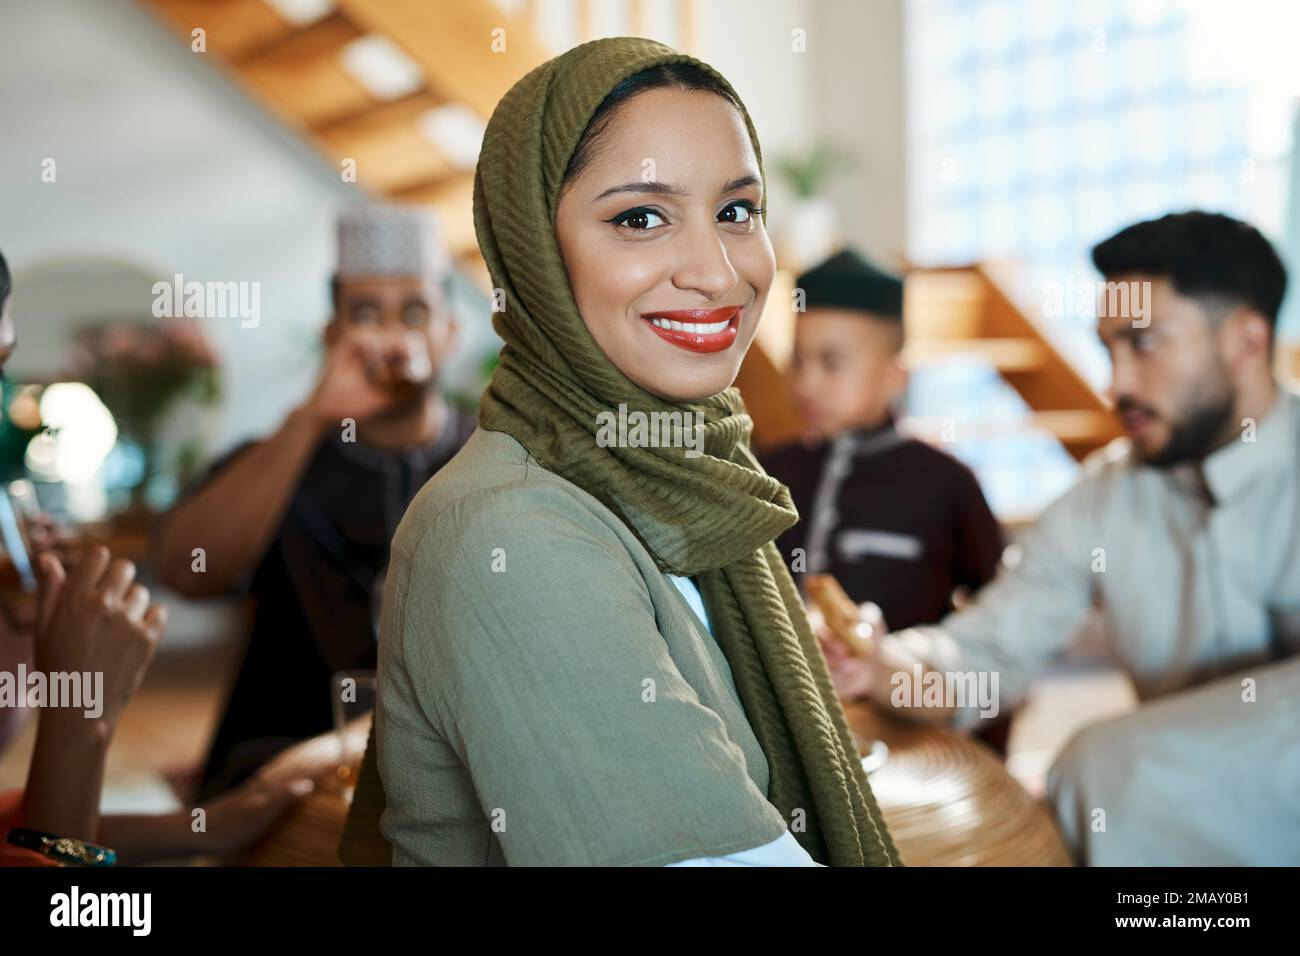 Ramadan family -Fotos und -Bildmaterial in hoher Auflösung Bild